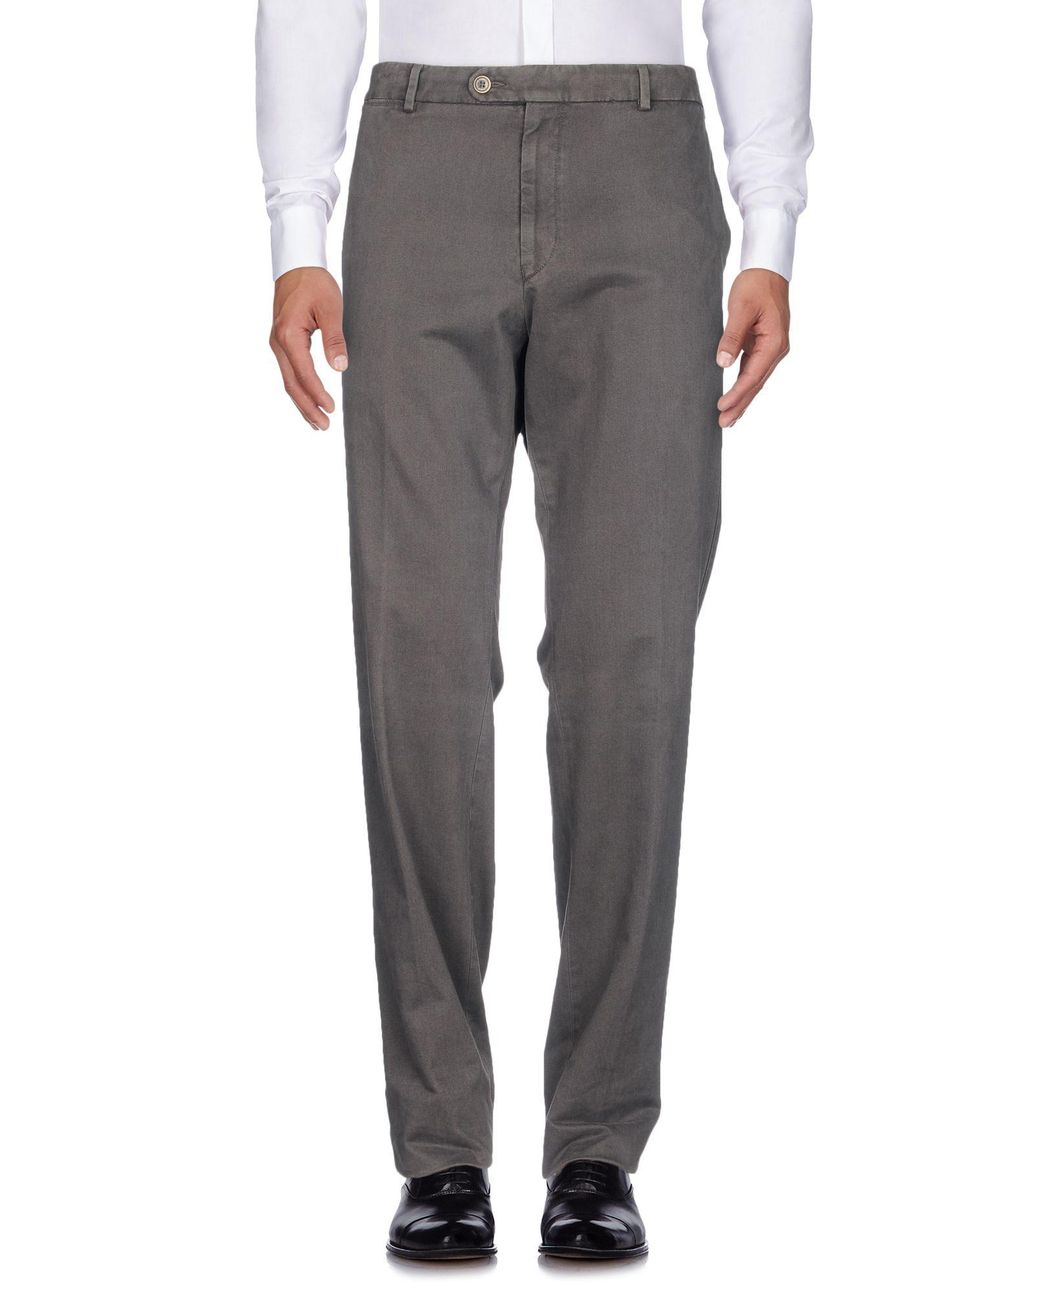 Bugatti Cotton Casual Pants in Lead (Gray) for Men - Lyst